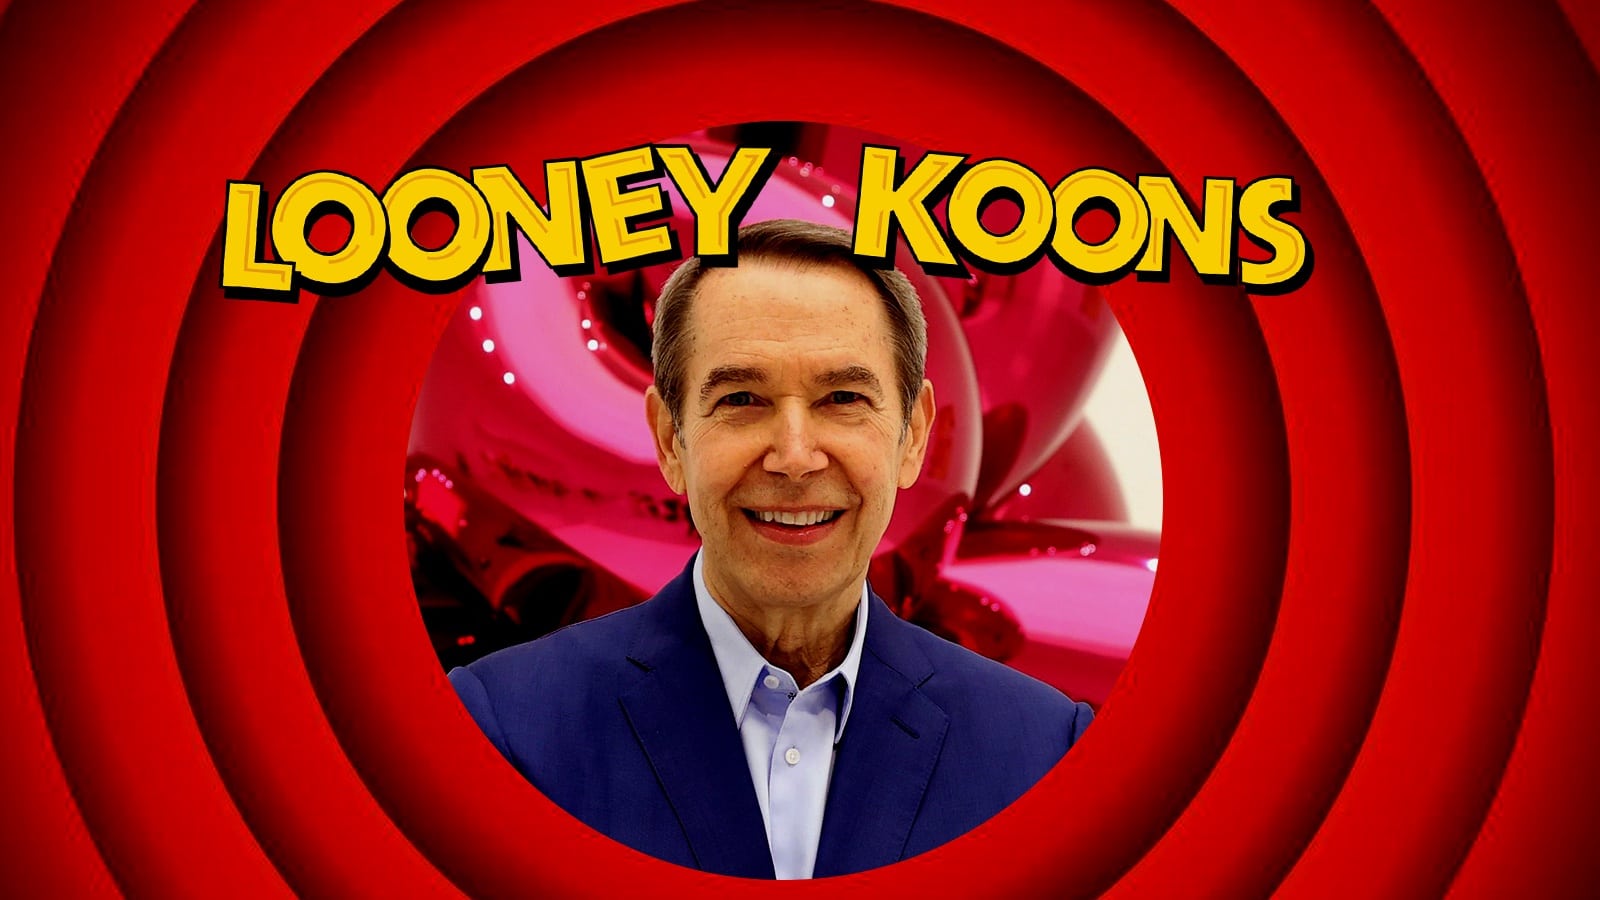 Looney Koons